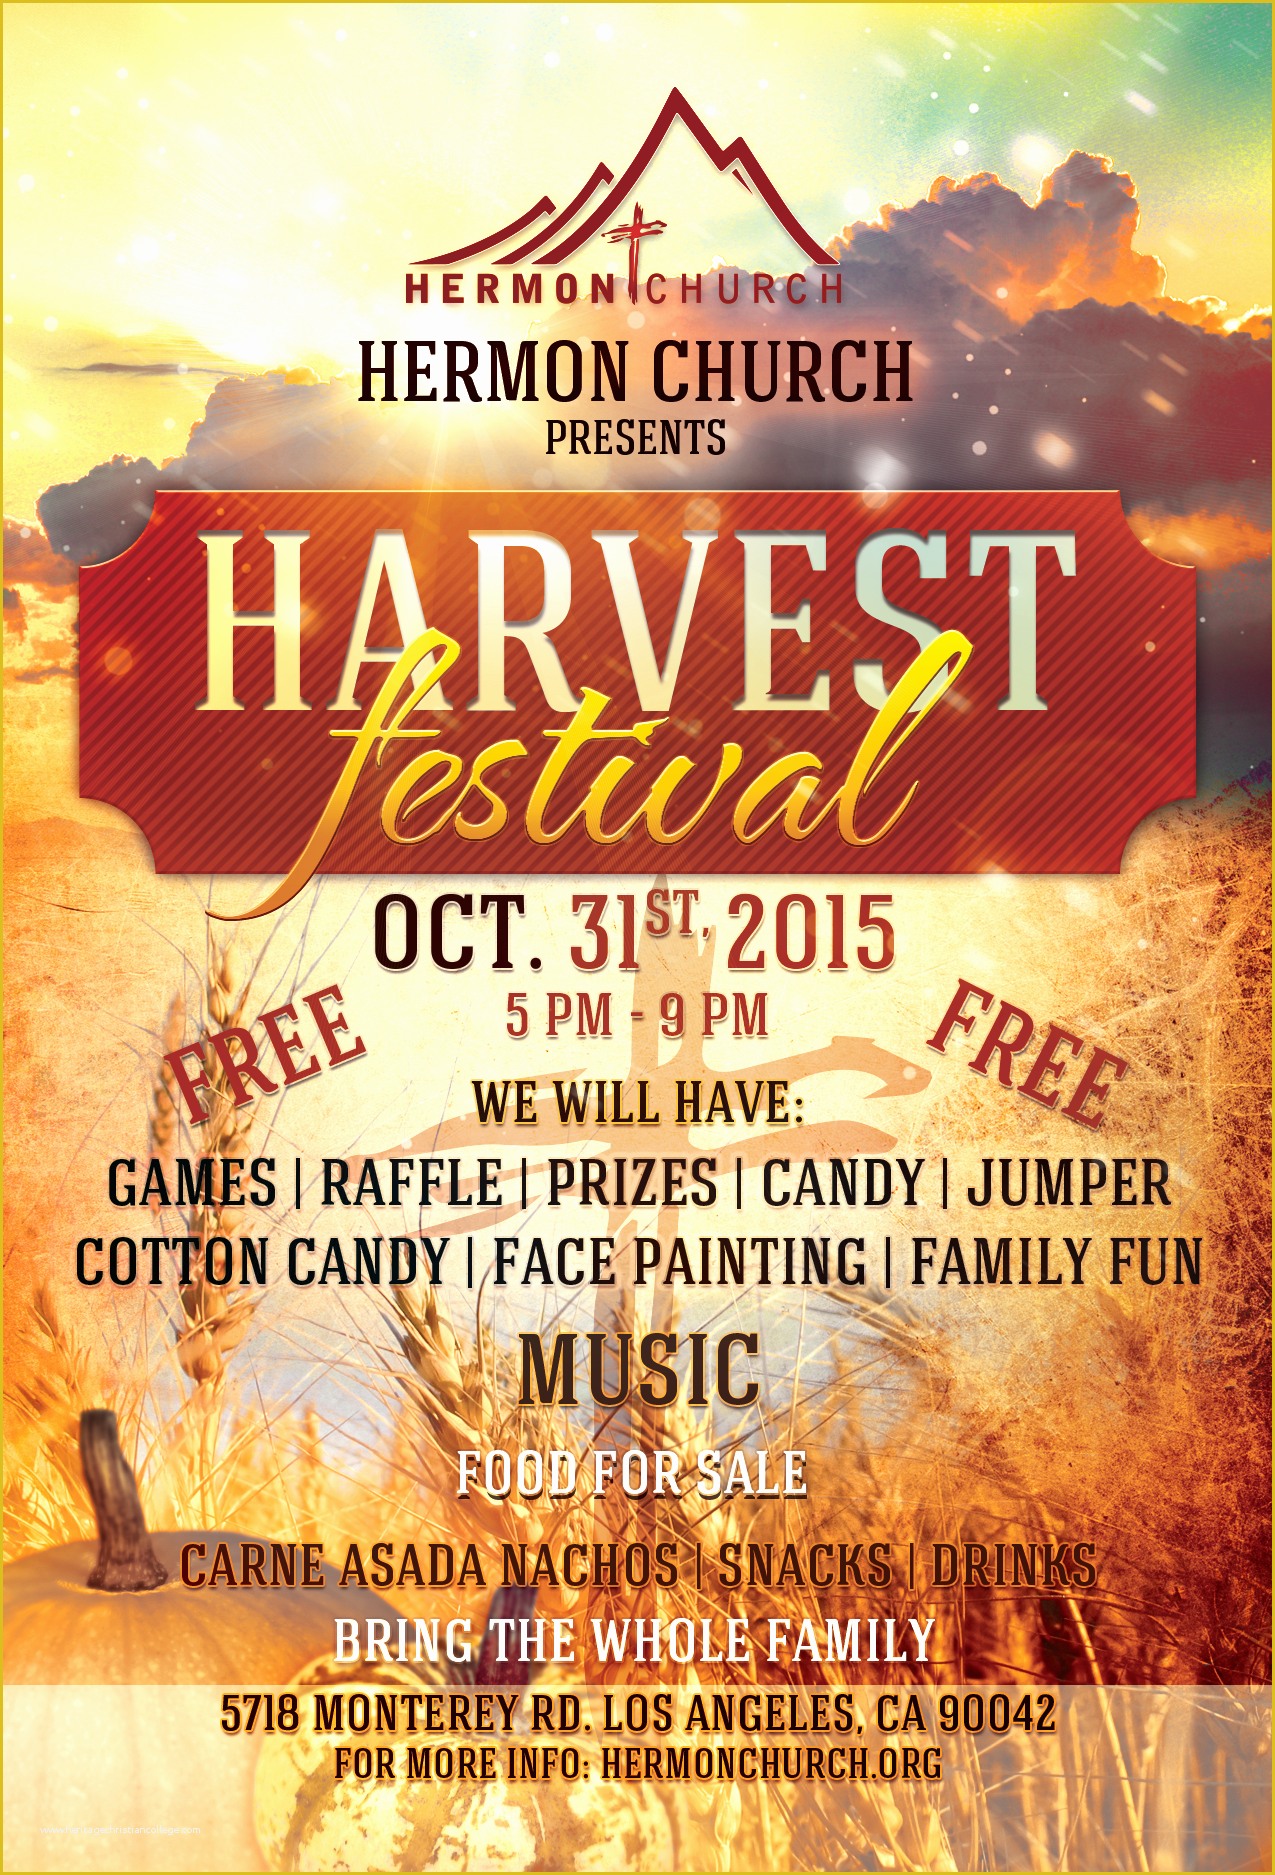 Harvest Festival Flyer Free Template Of Related Keywords &amp; Suggestions for Harvest Festival Flyer